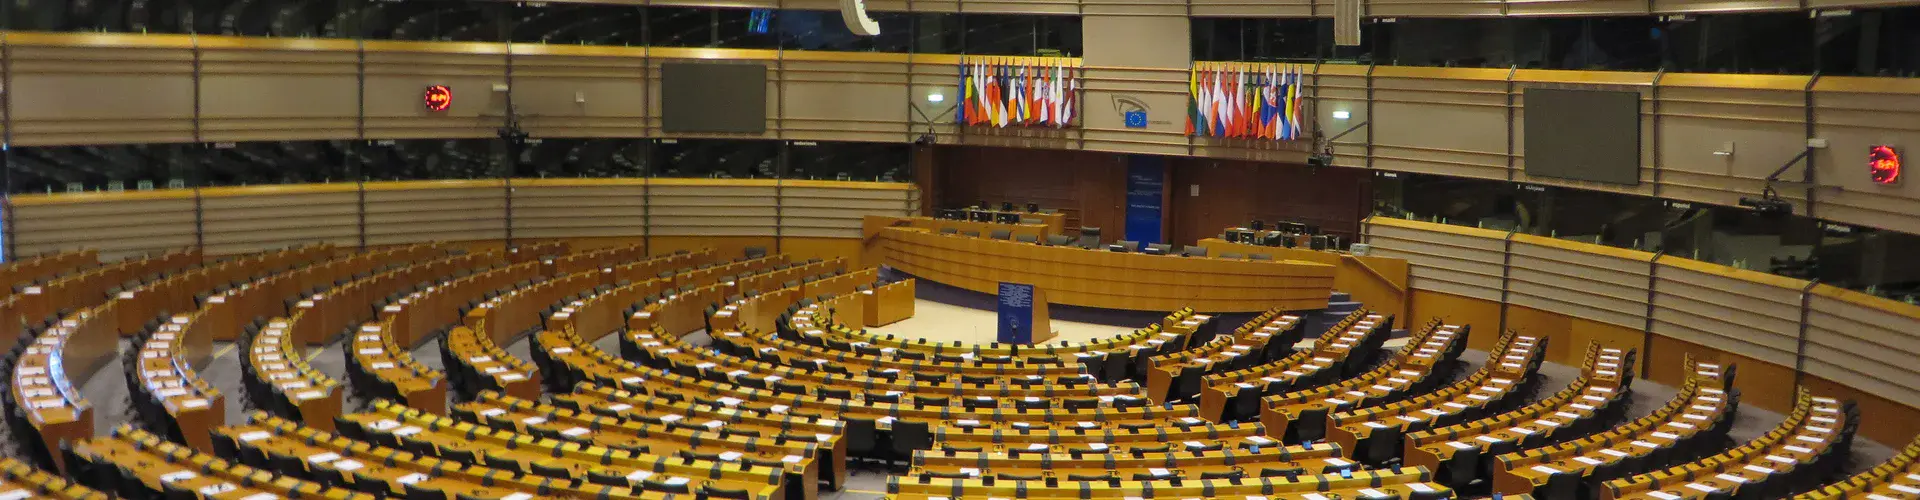 European Parliament Plenary Chamber (Credit: diamond geezer via Flickr)